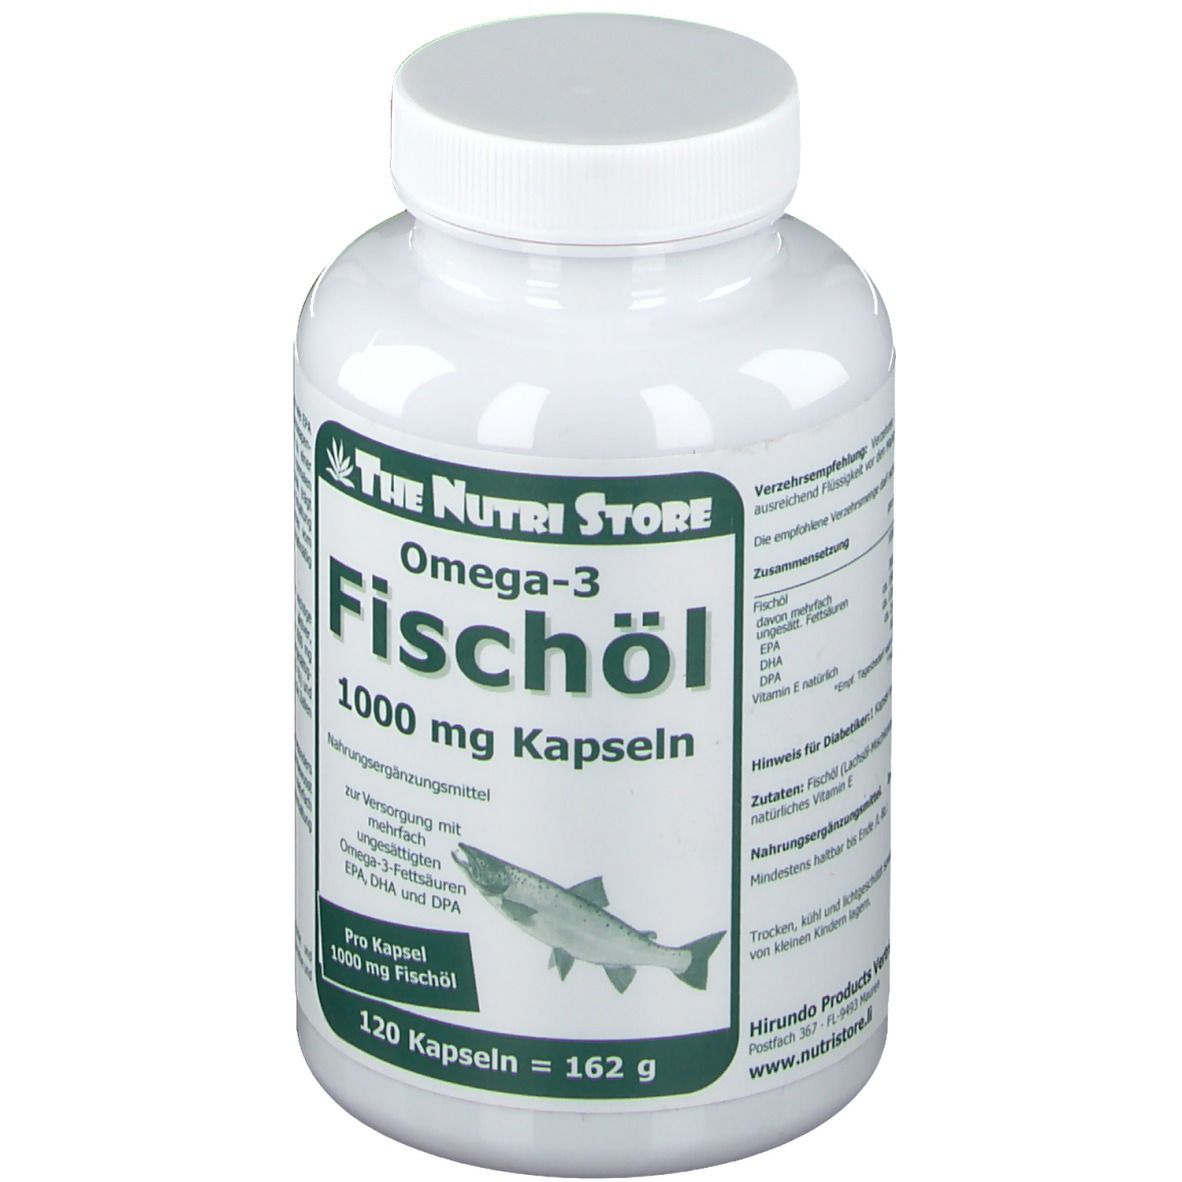 Omega 3 Fischöl 1000 mg Kapseln